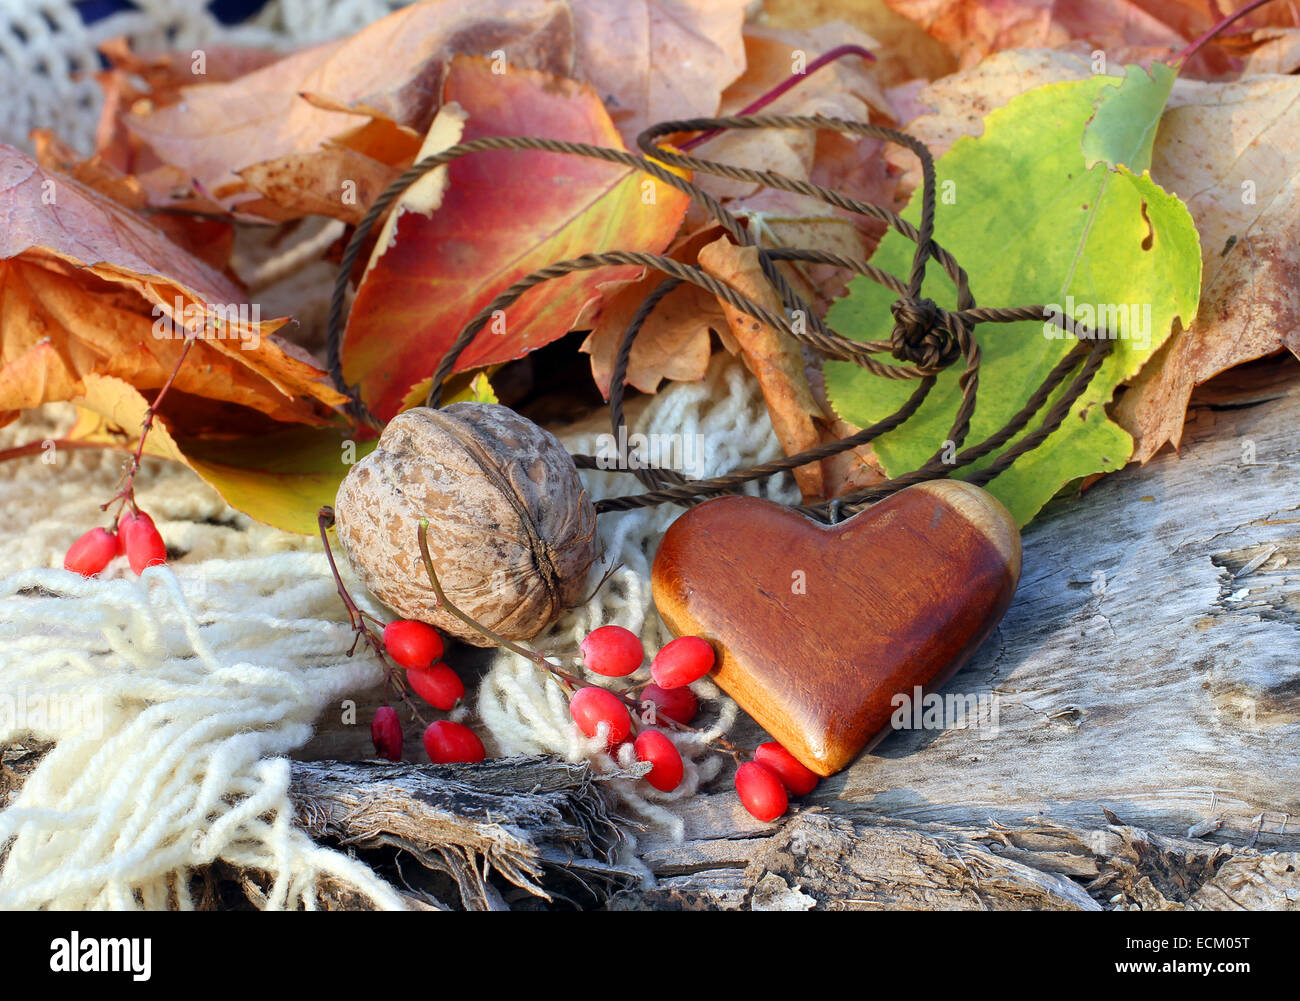 Ethnic handmade wooden heart amulet on autumn-style background Stock Photo